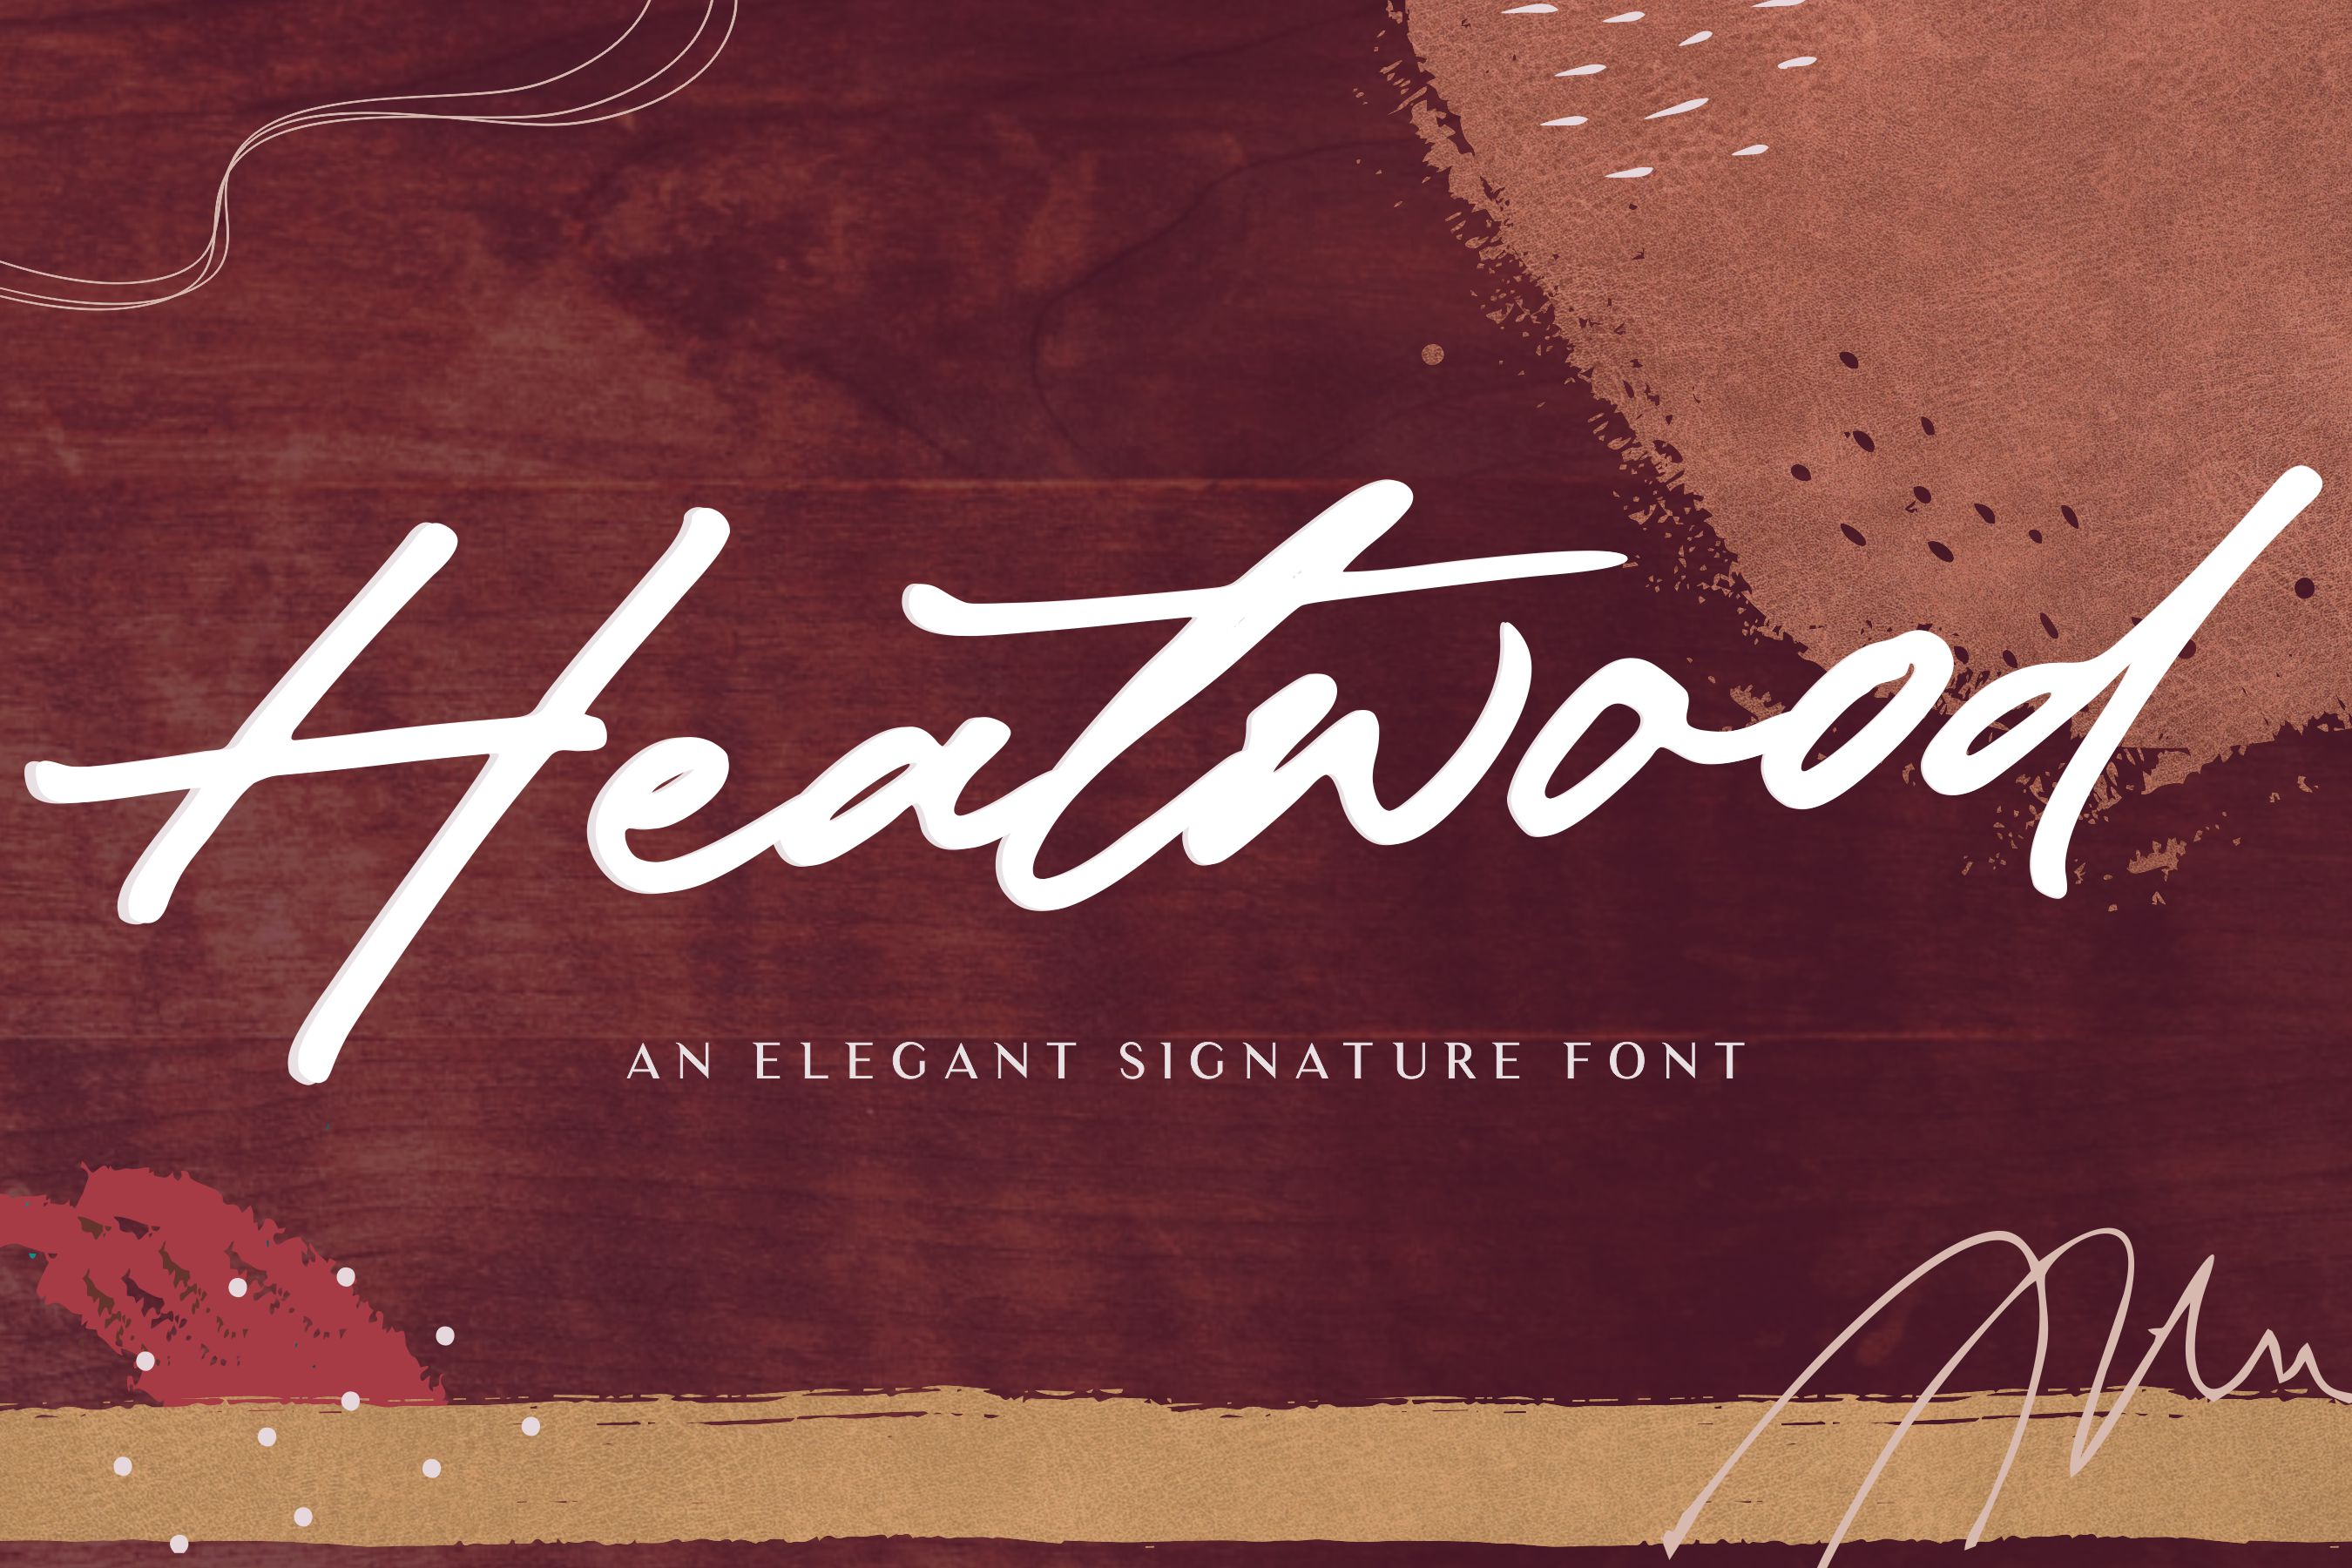 Heatwood An Elegant Signature Font By Balpirick Studio Thehungryjpeg Com